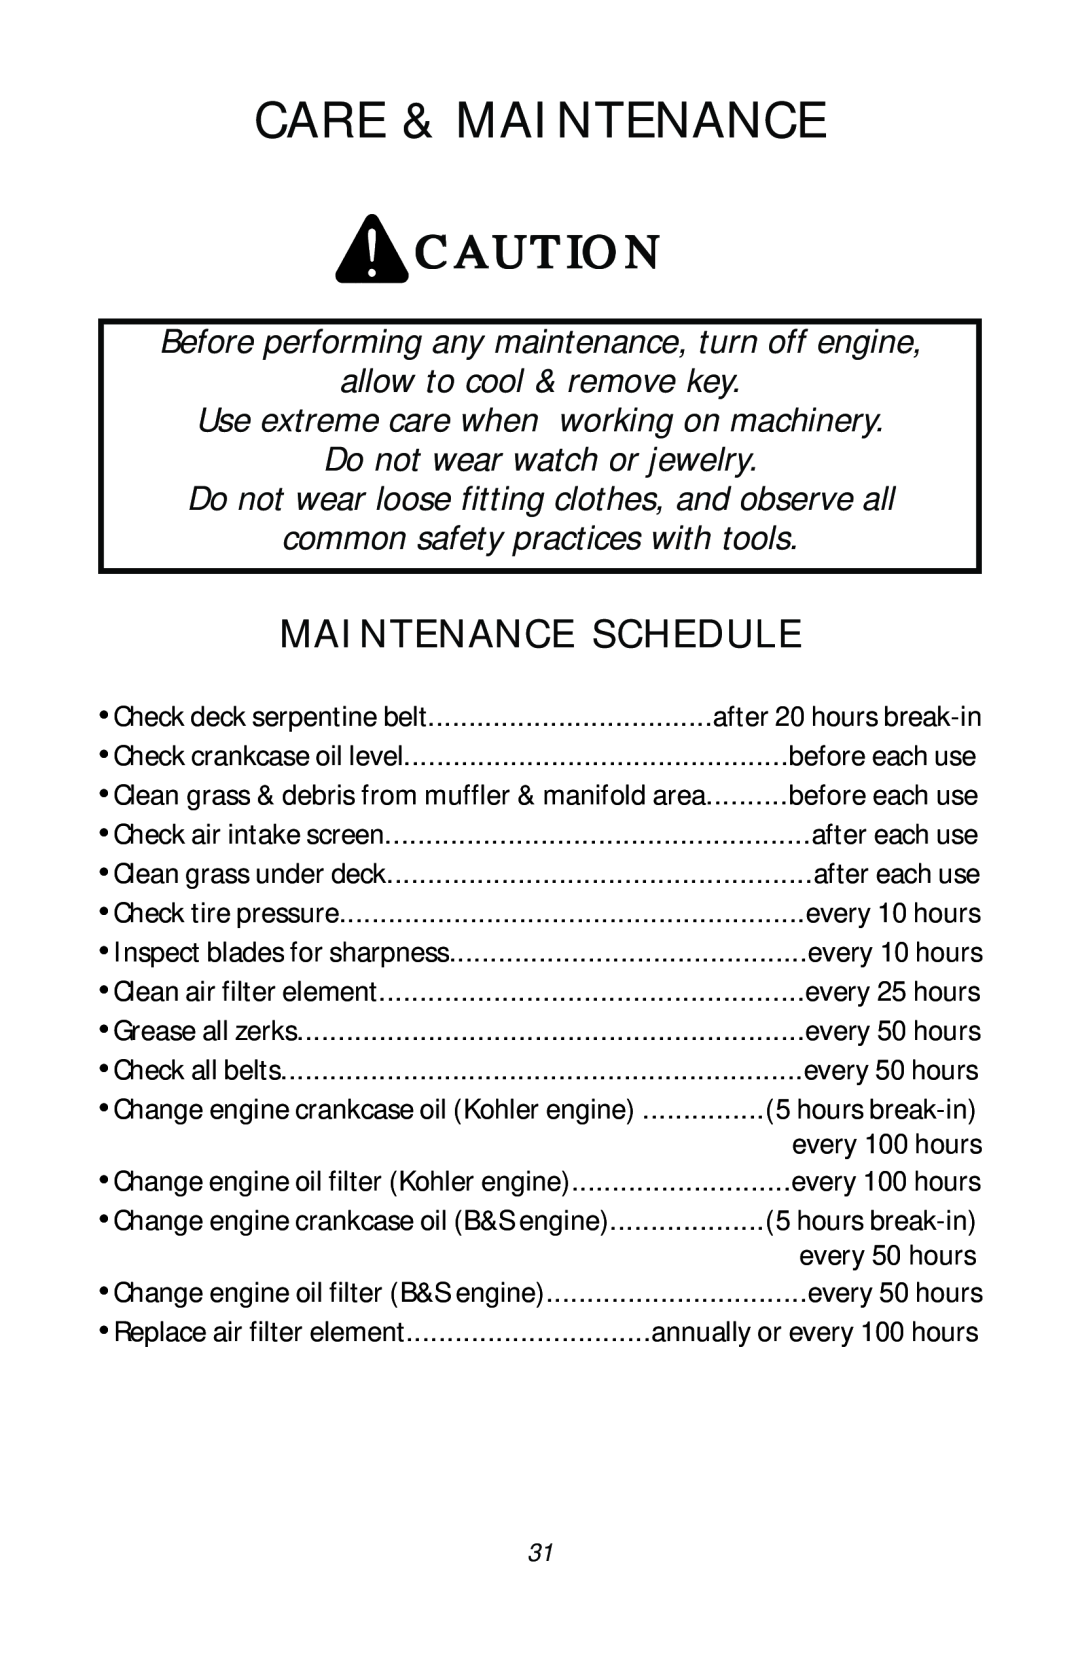 Dixon 13782-0503, ZTR 4516, ZTR 4515, ZTR 4518 manual Care & Maintenance, Maintenance Schedule 